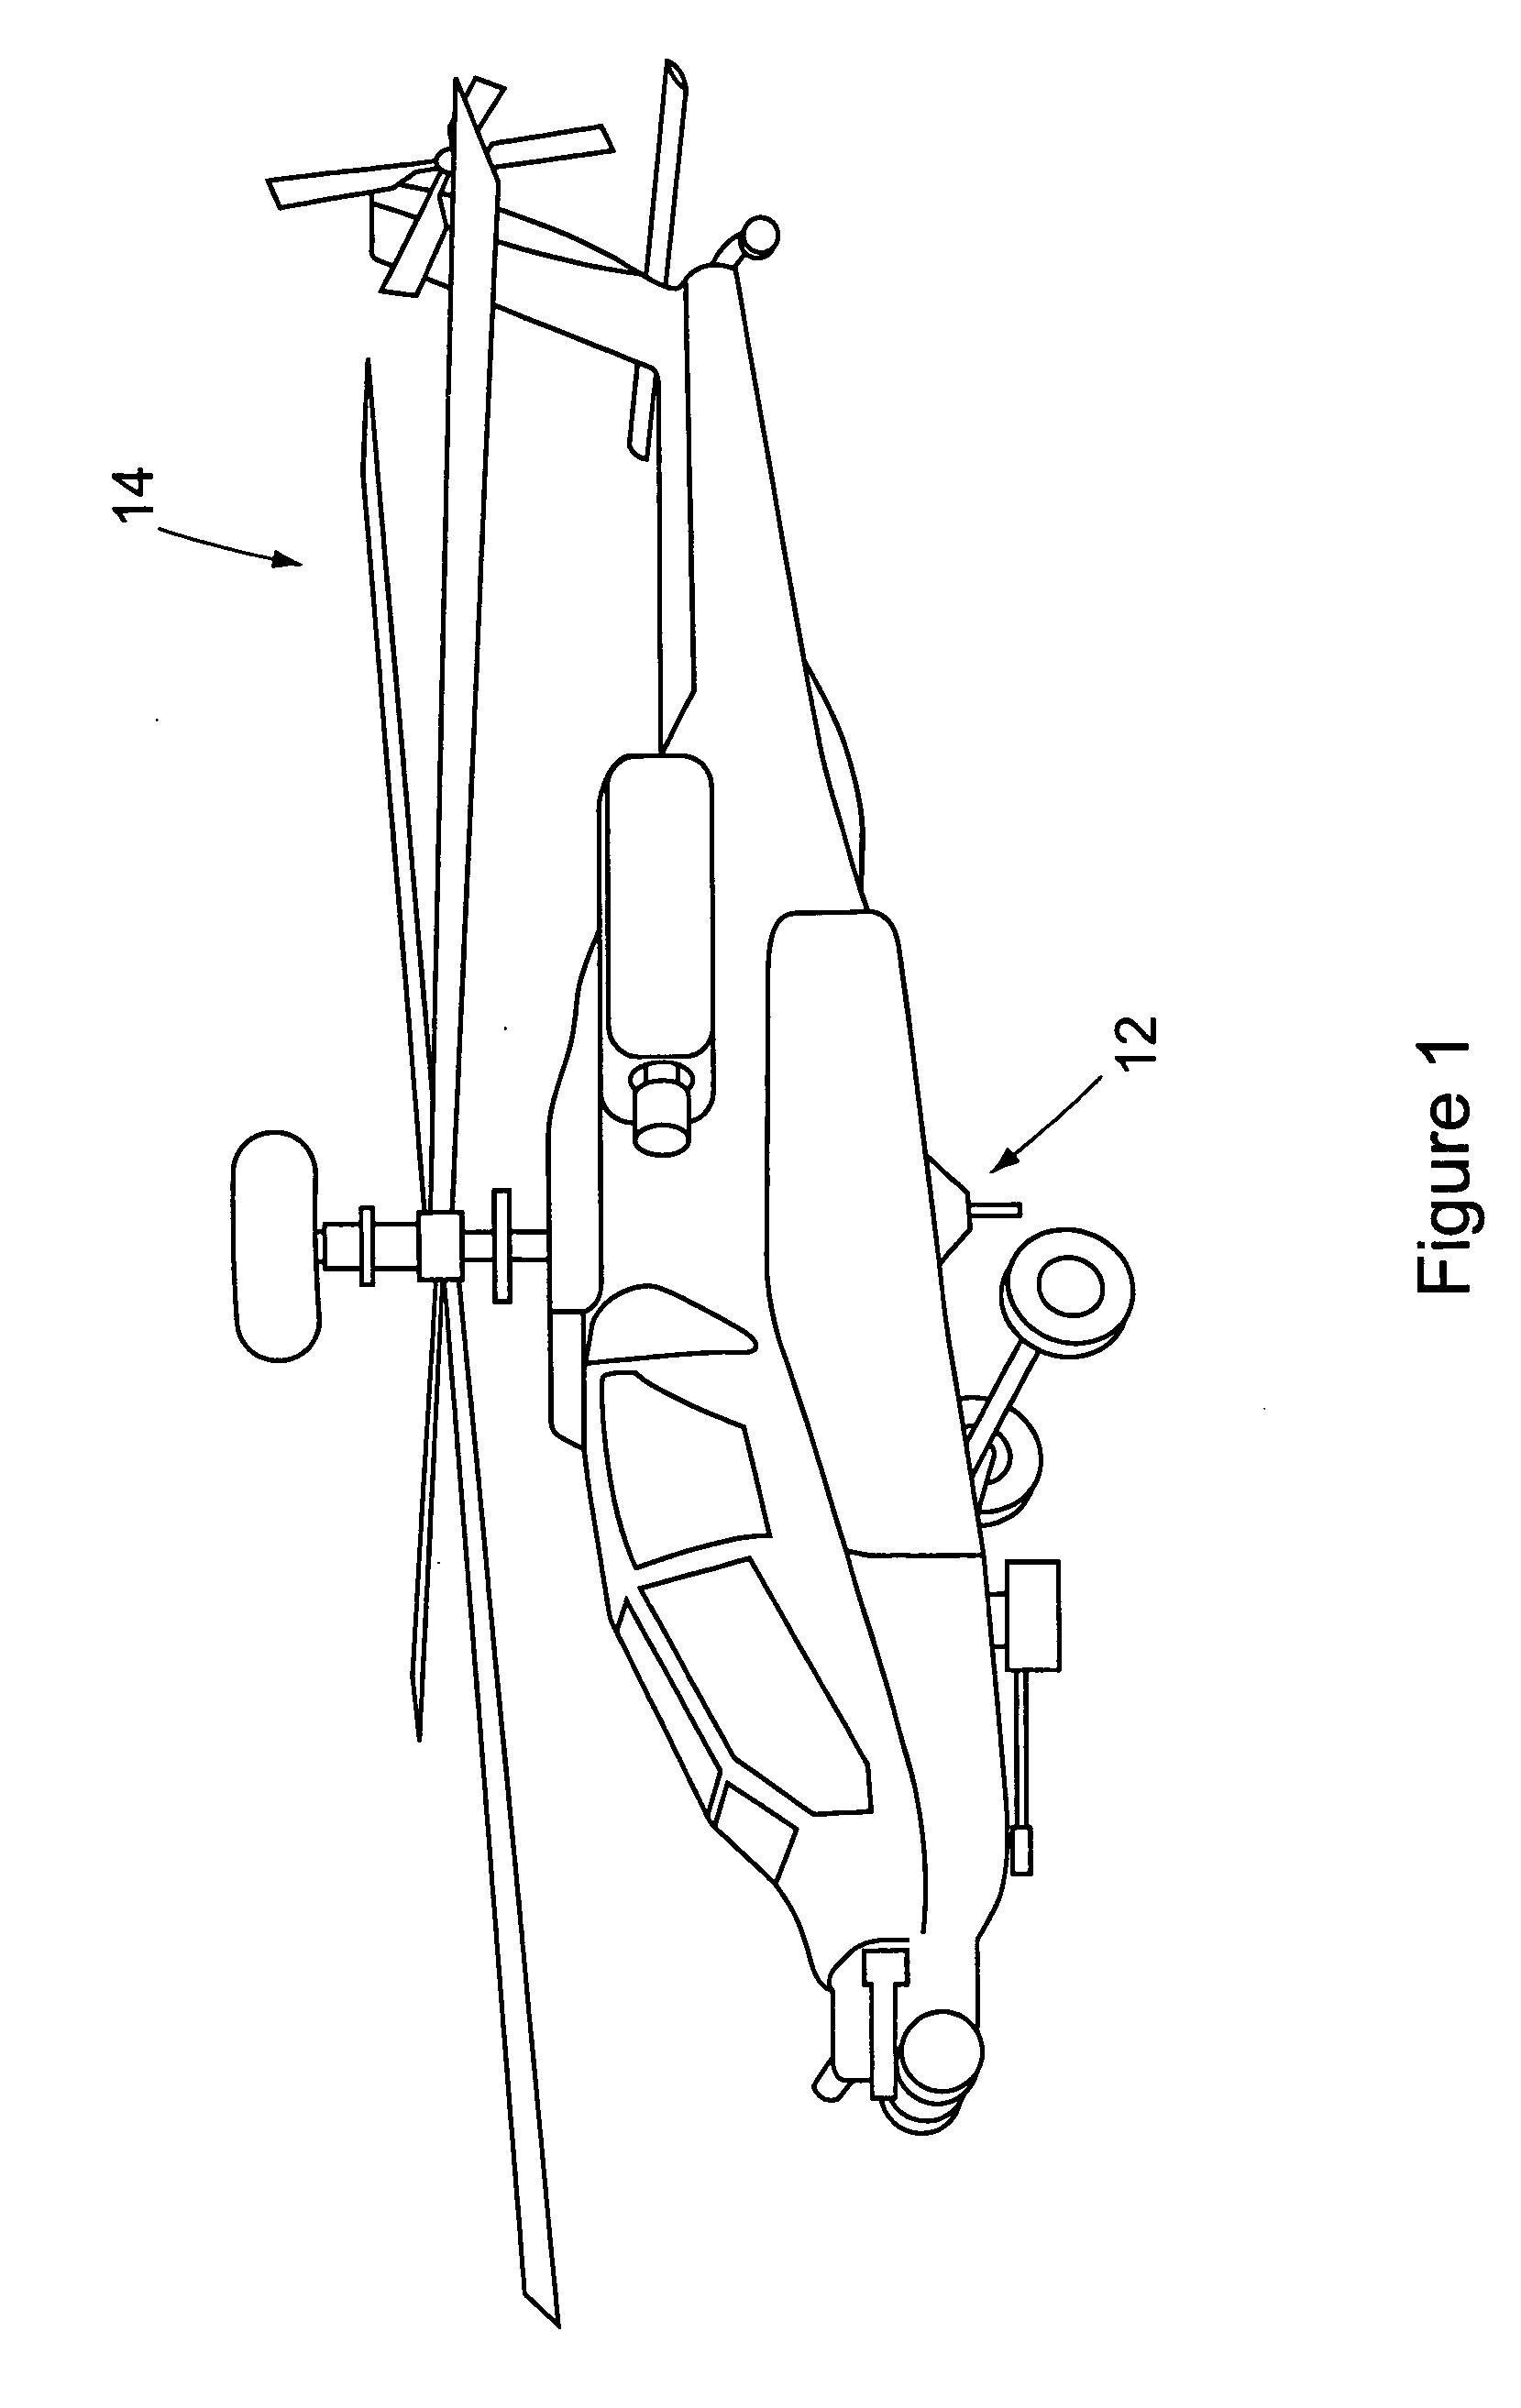 Landing assist apparatus with offset landing probe